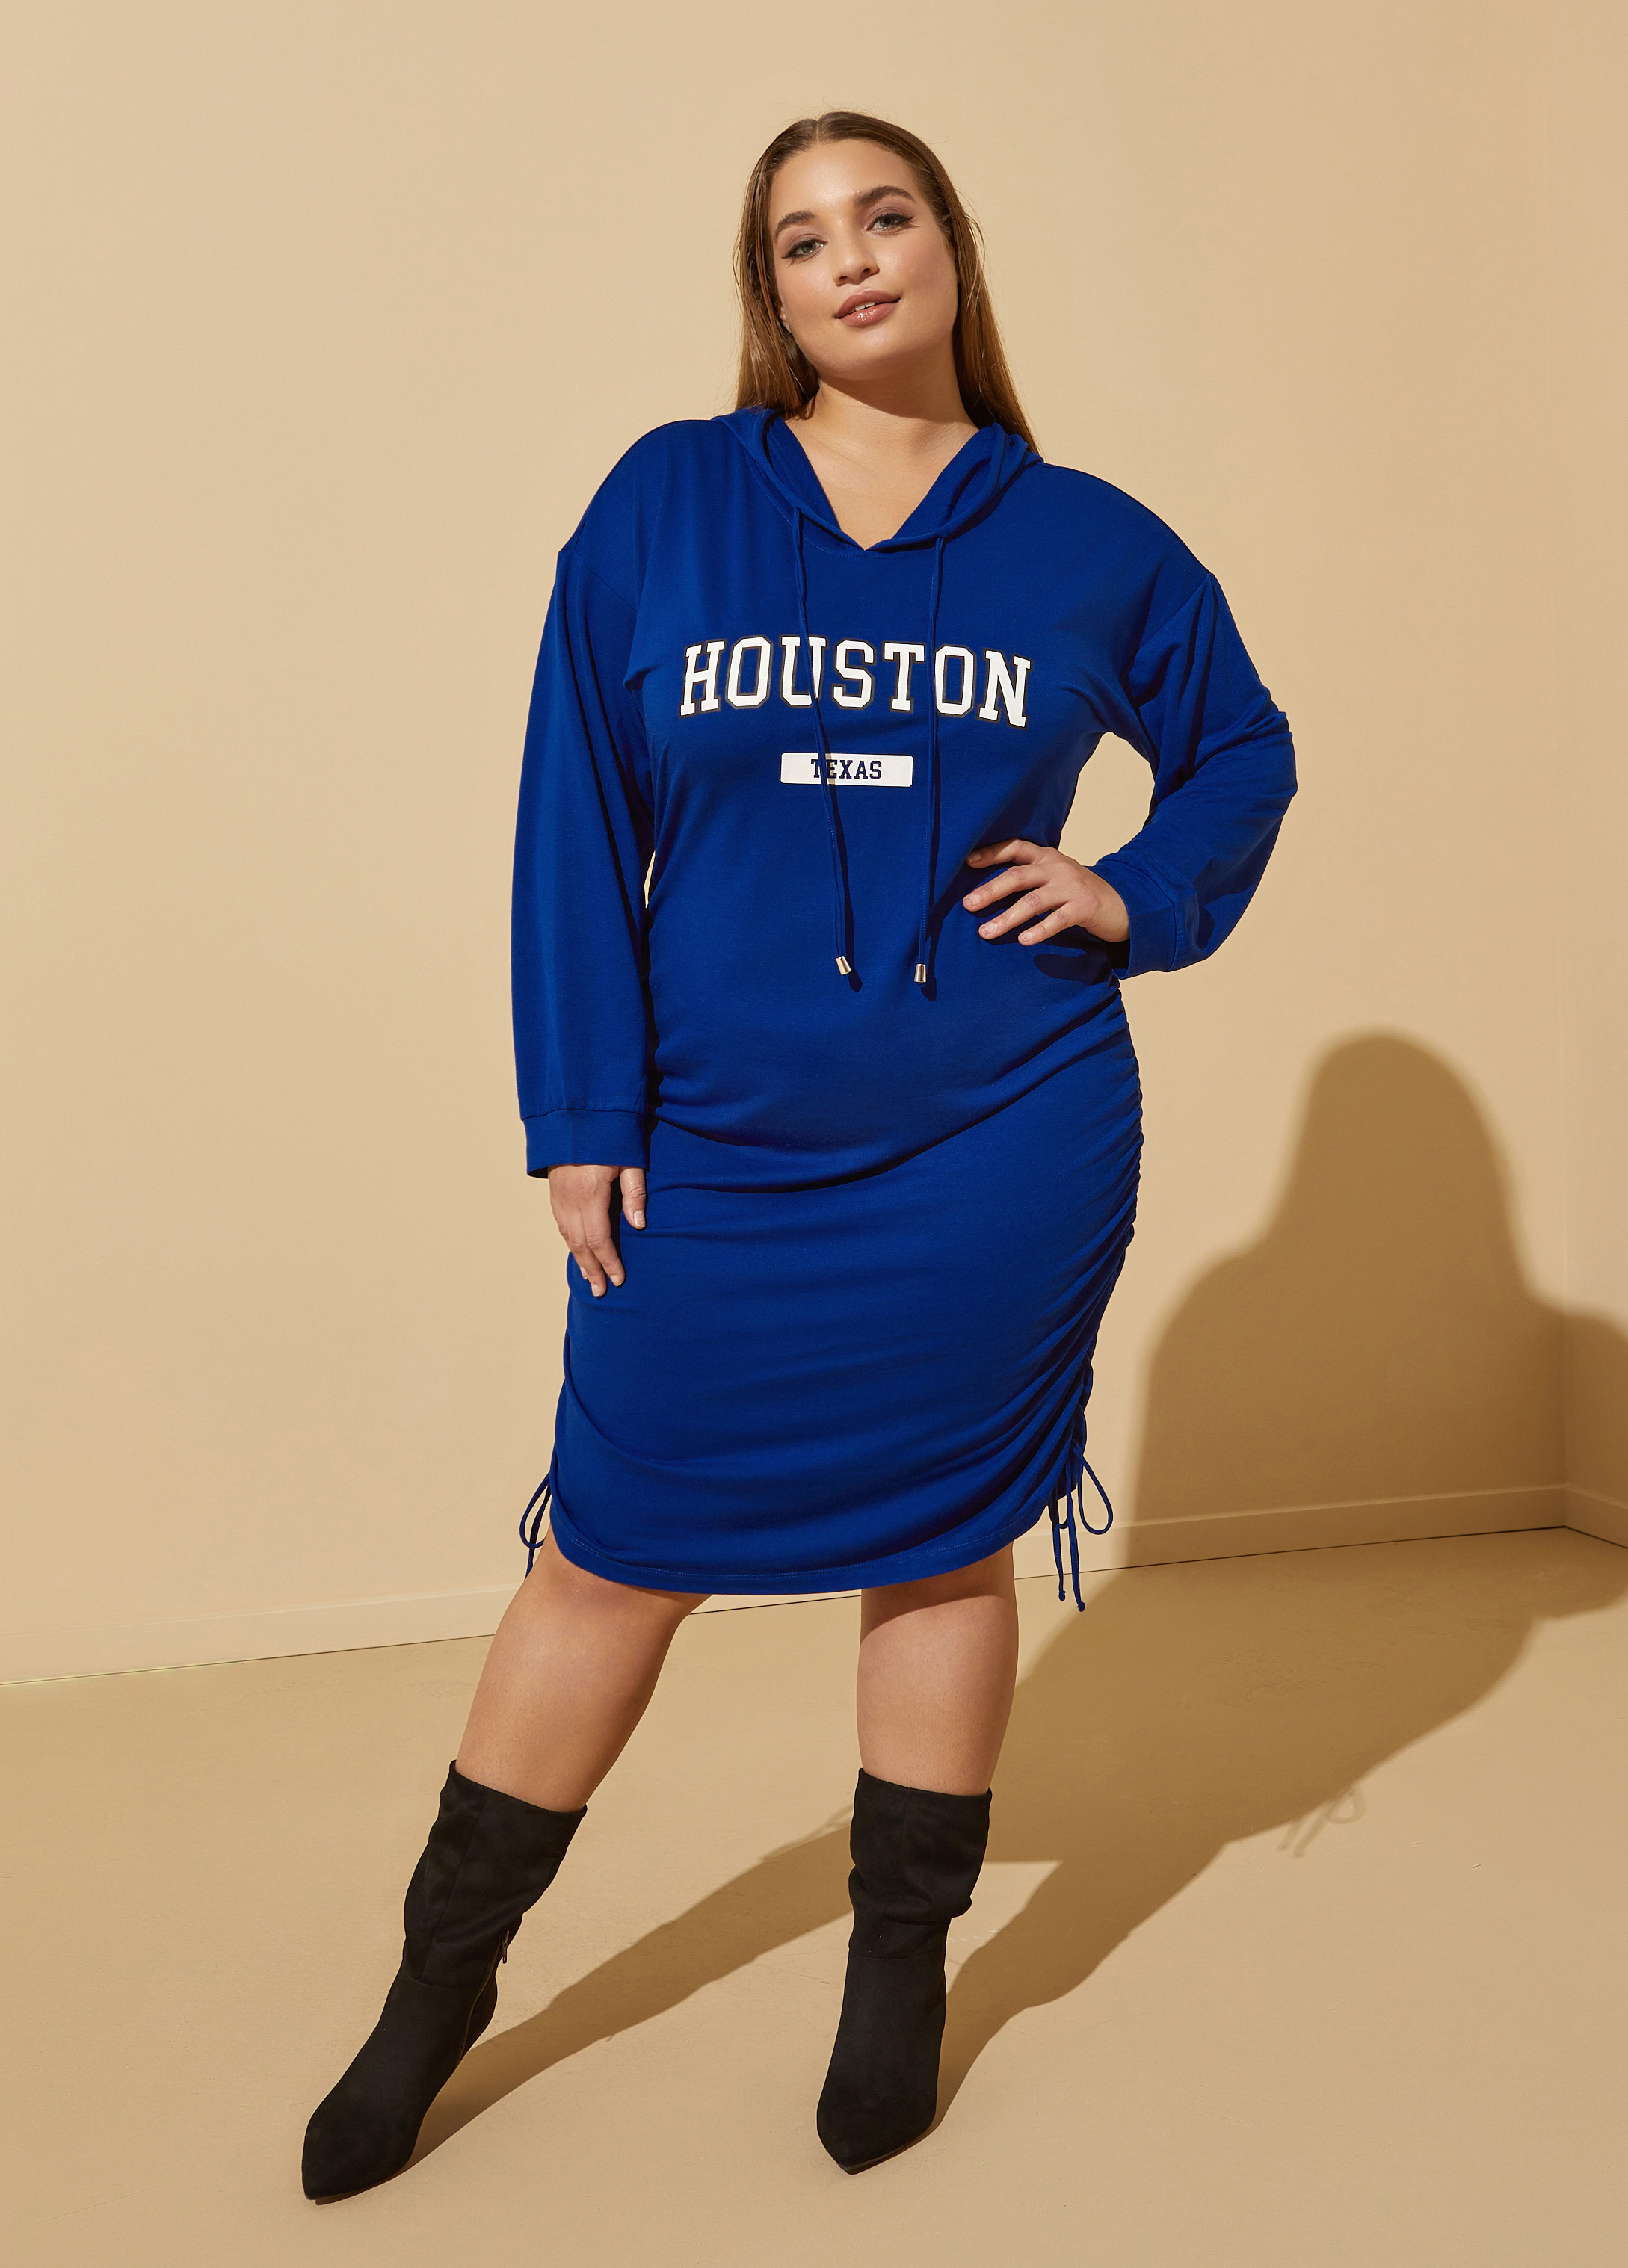 Plus Size Houston Ruched Hoodie Dress, BLUE, 22/24 - Ashley Stewart